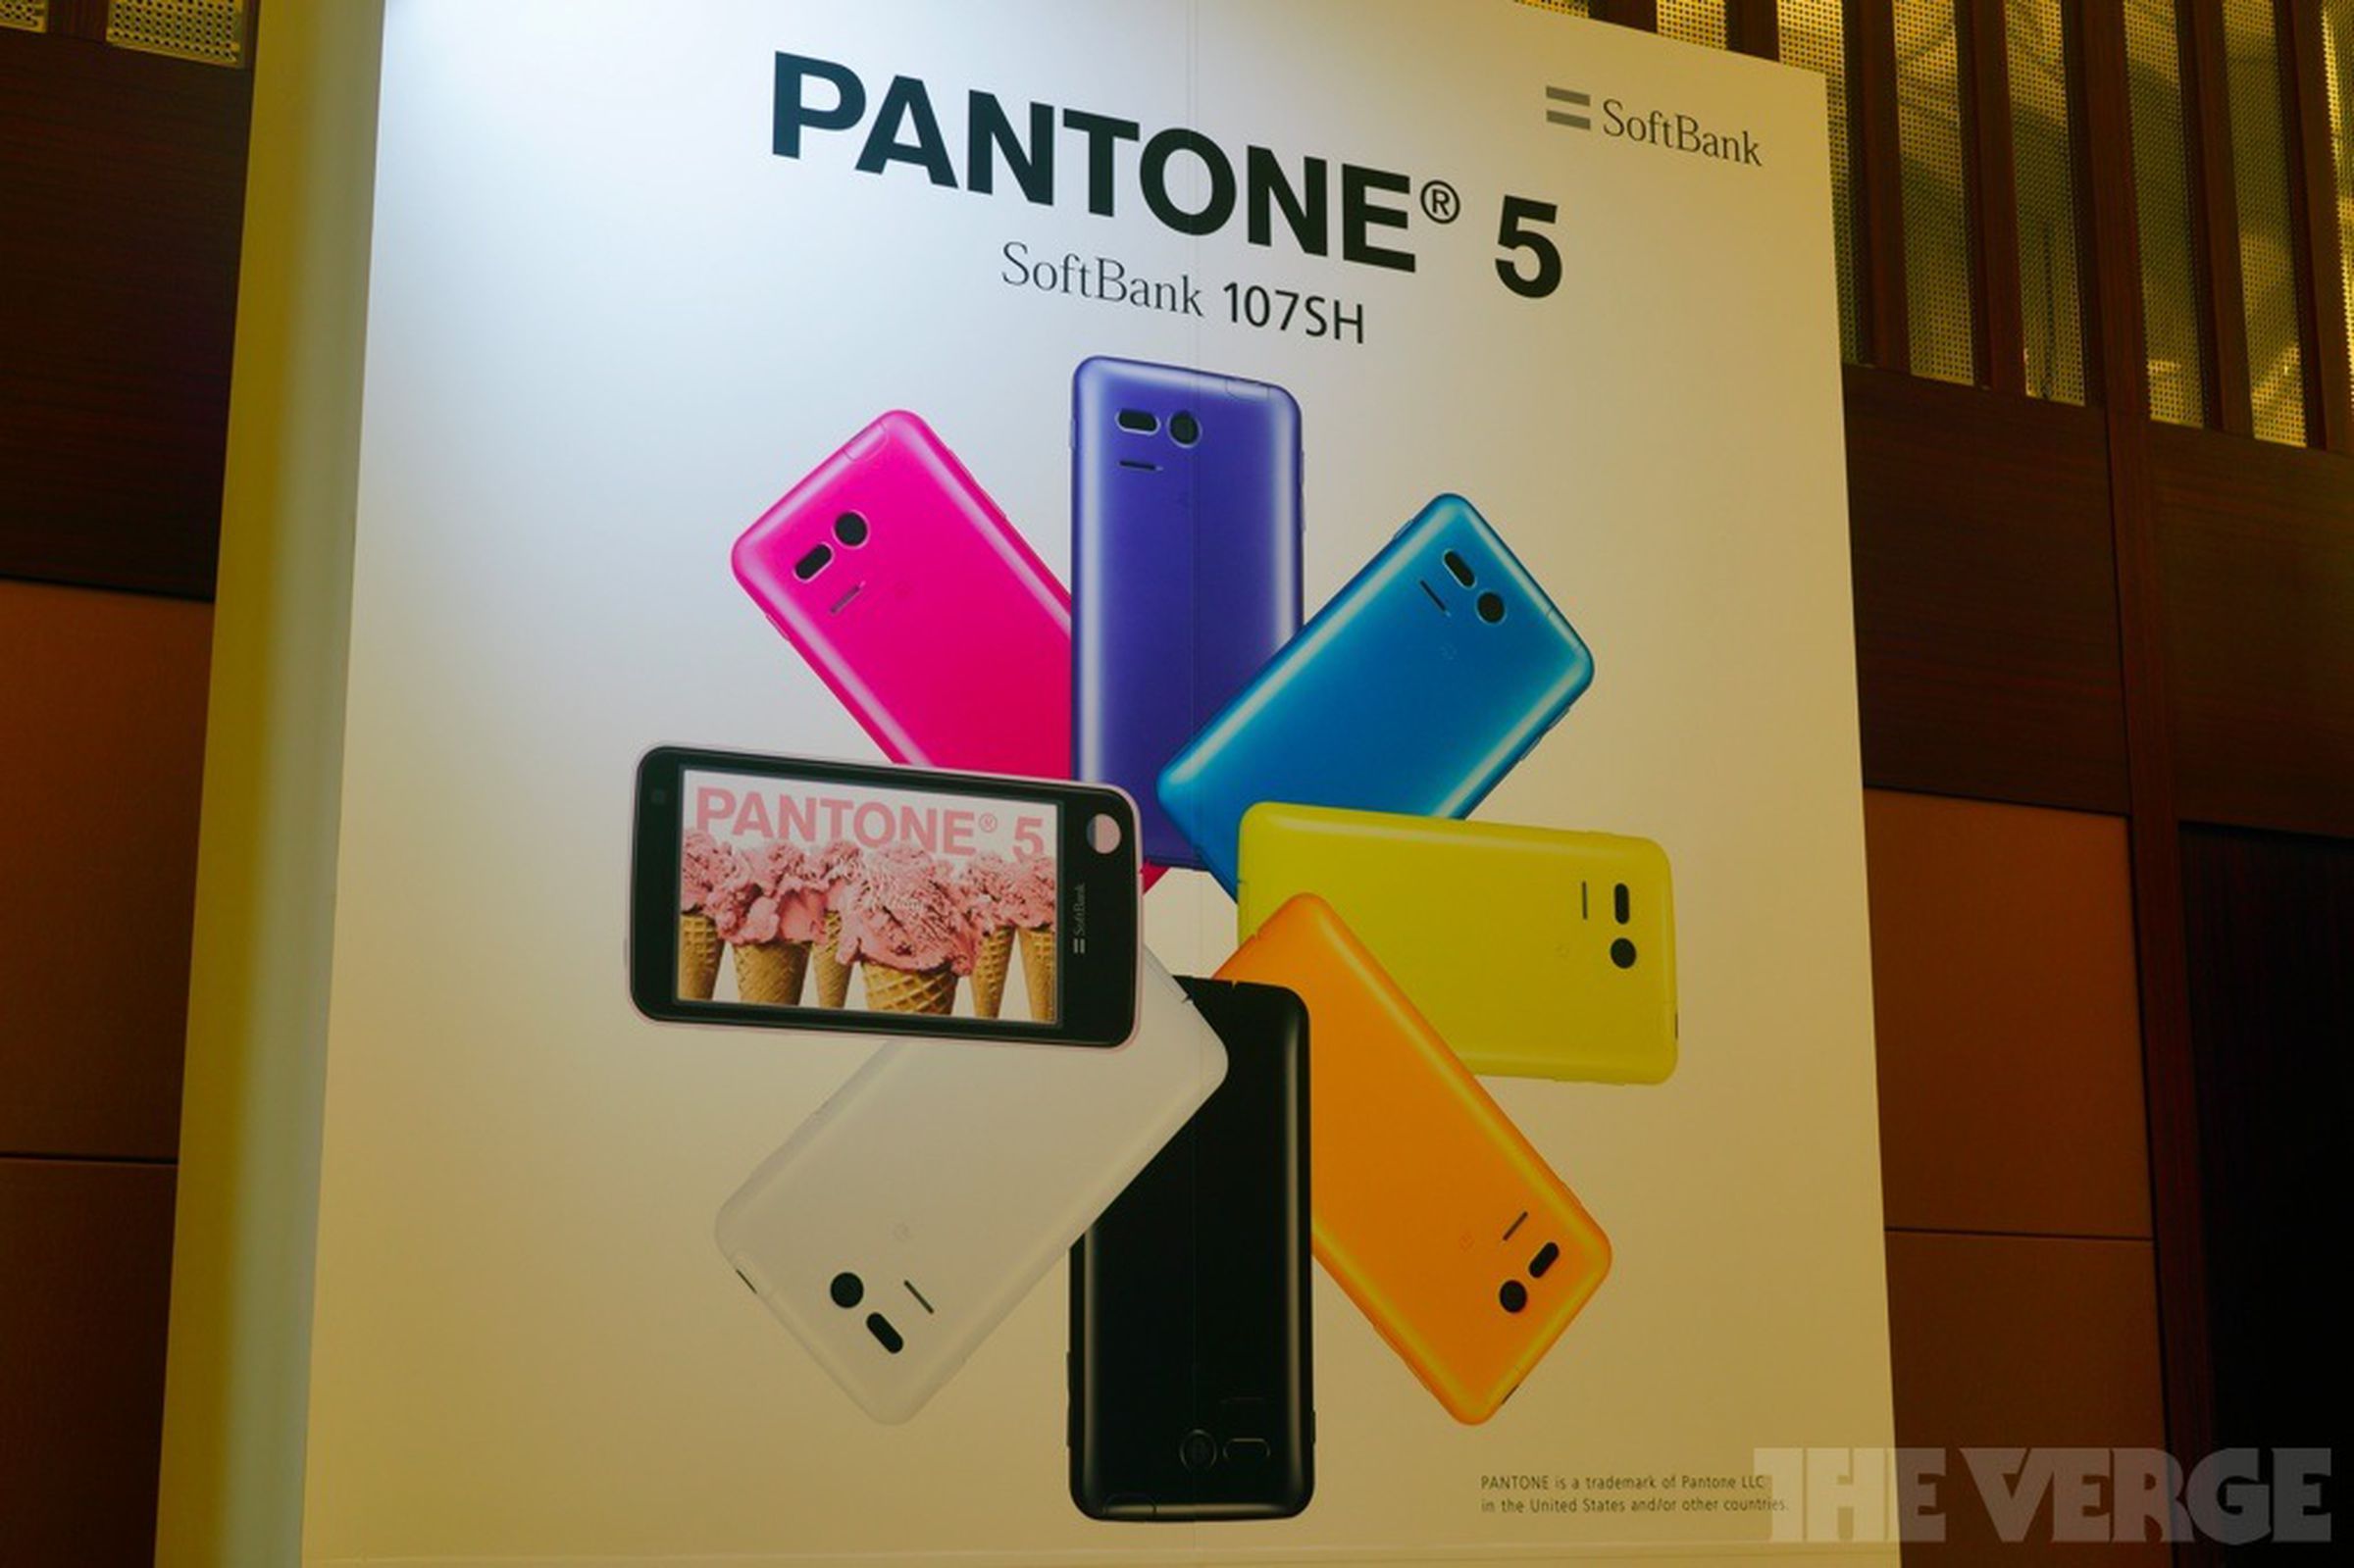 SoftBank Pantone 5 107SH hands-on photos